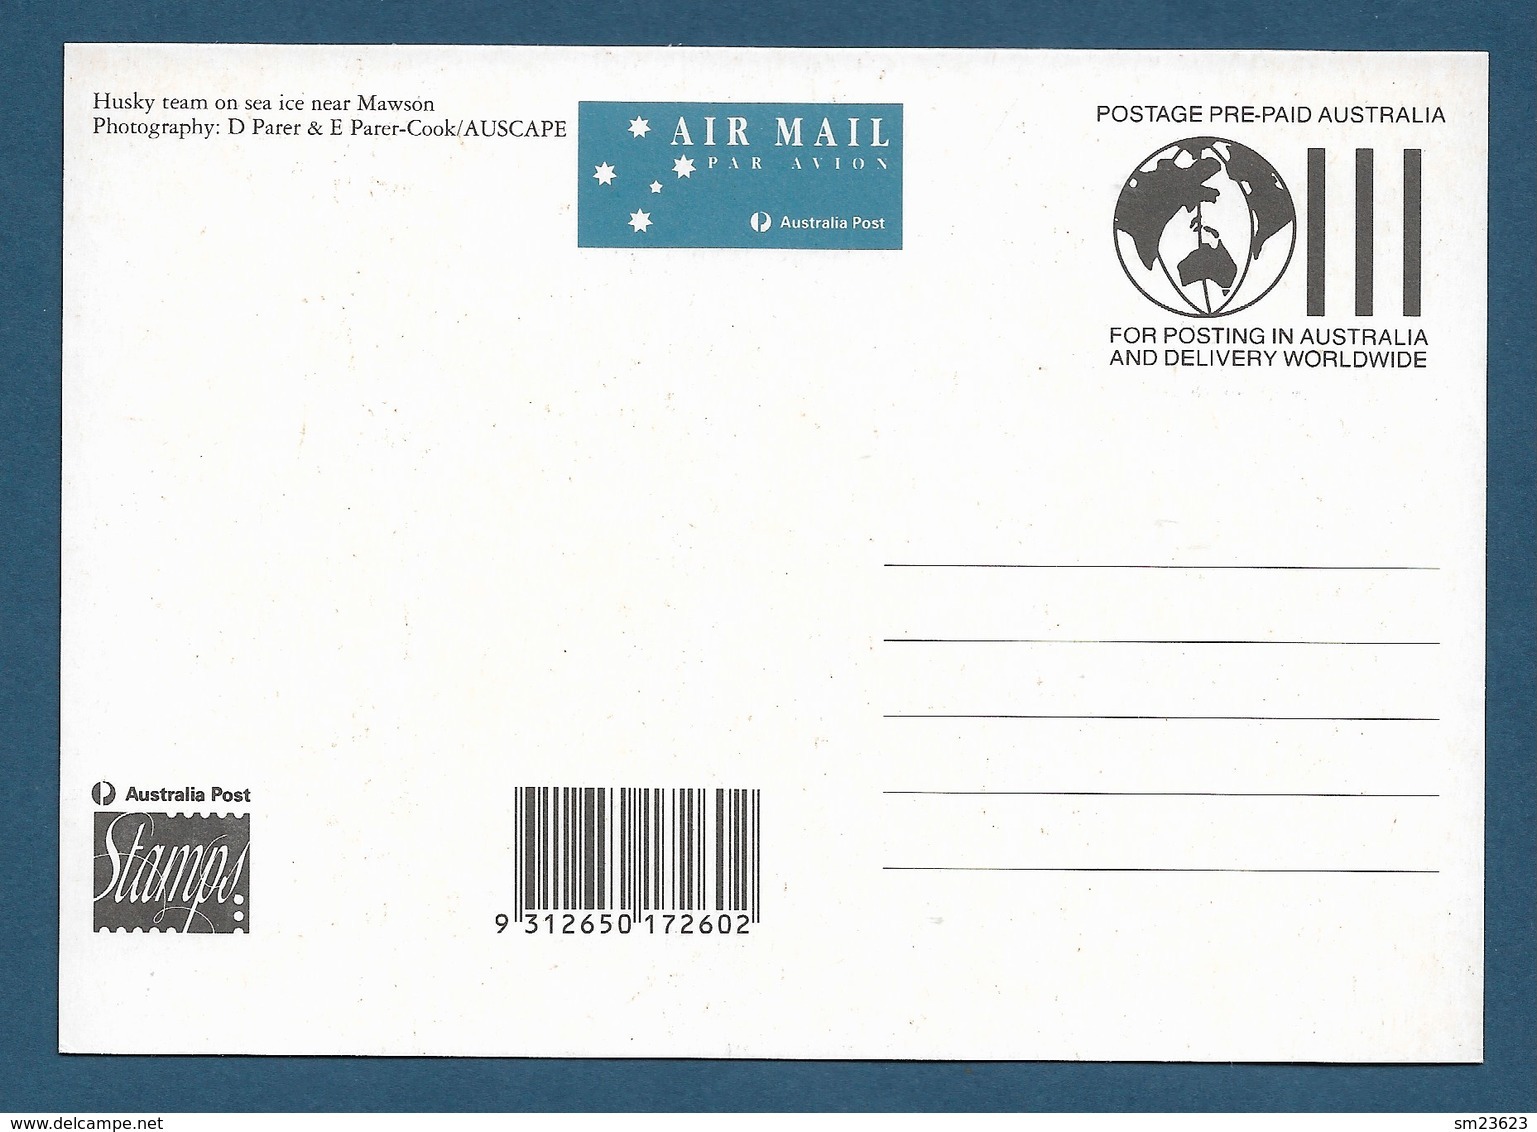 Australian Antarctic Territory 1994 Mi.Nr. 99 , The Last Huskie - Maximum Card - First Day Of Issue 13 January 1994 - Tarjetas – Máxima